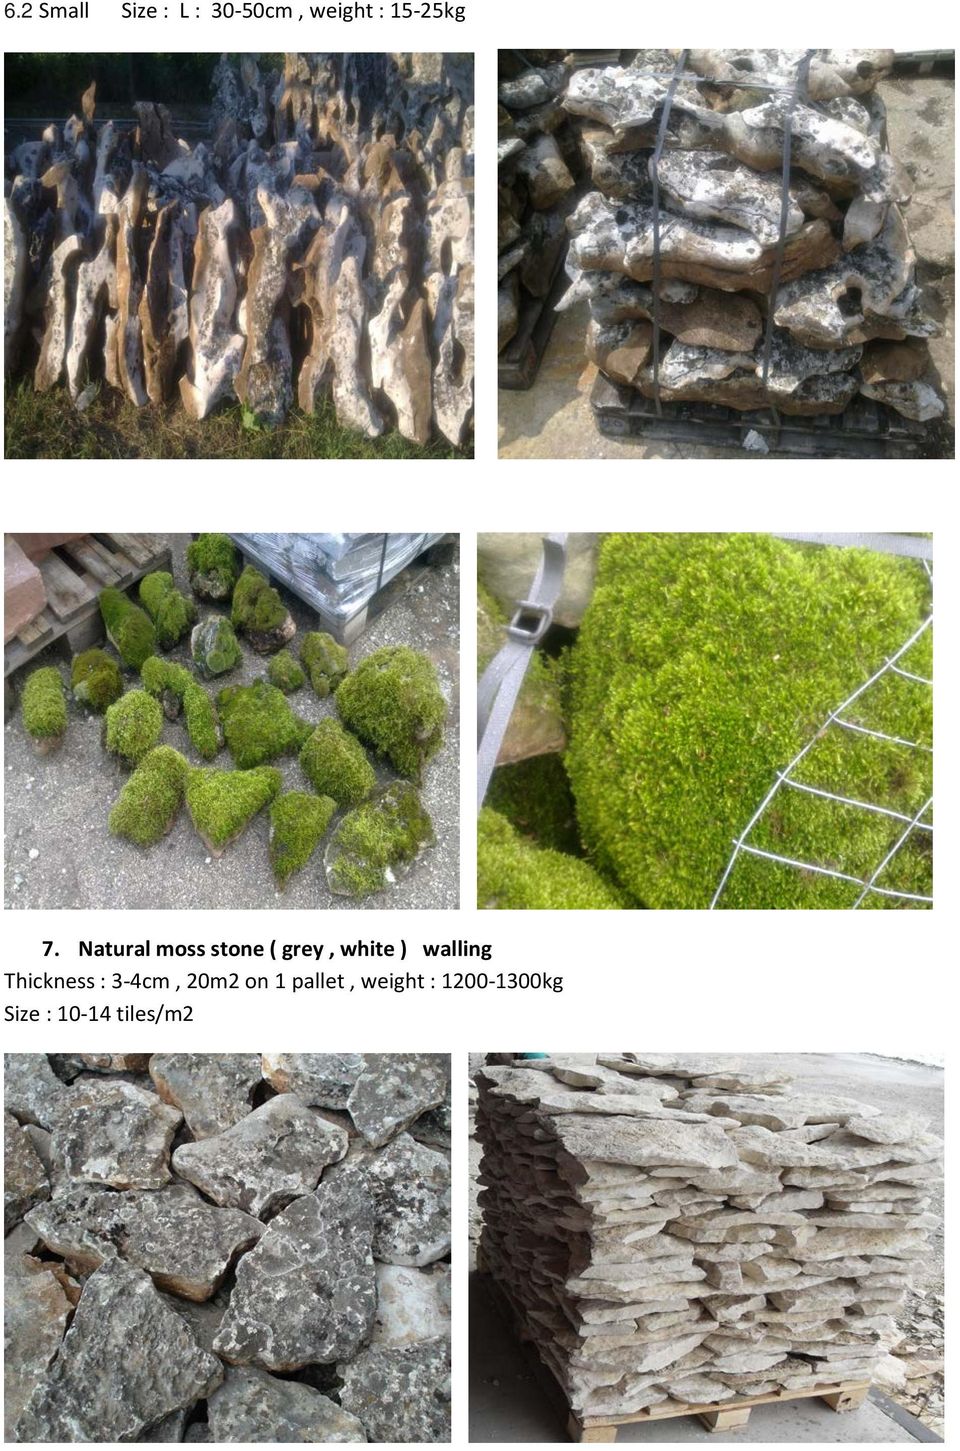 Natural moss stone ( grey, white ) walling